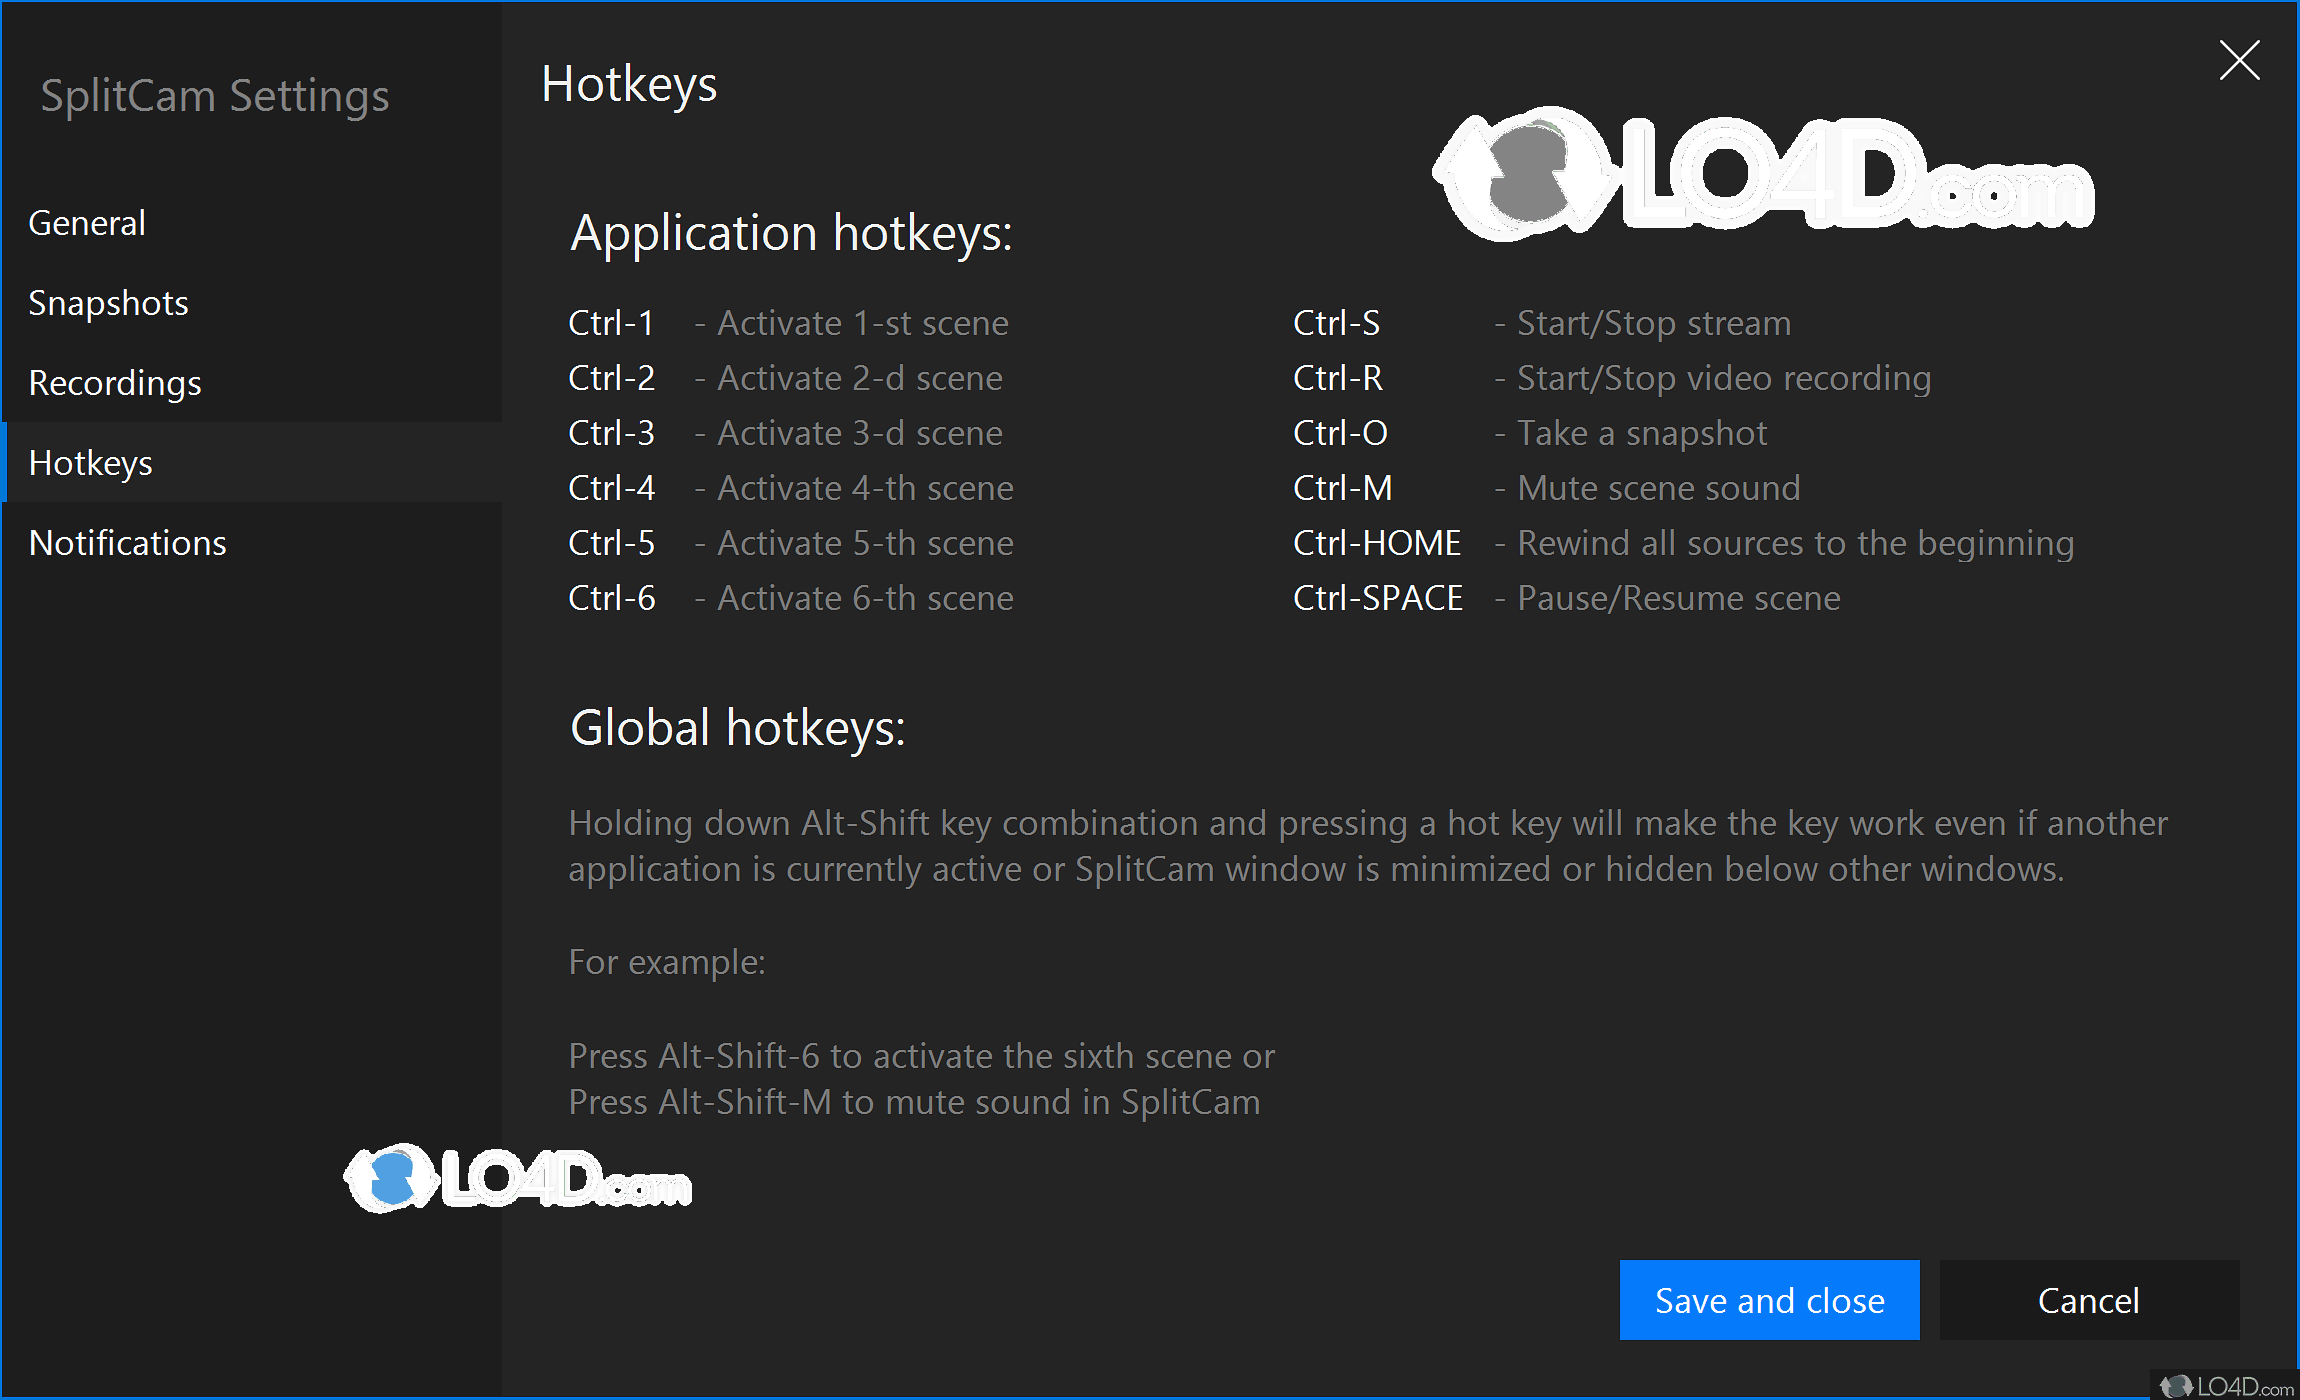 SplitCam 10.7.11 instal the last version for ios